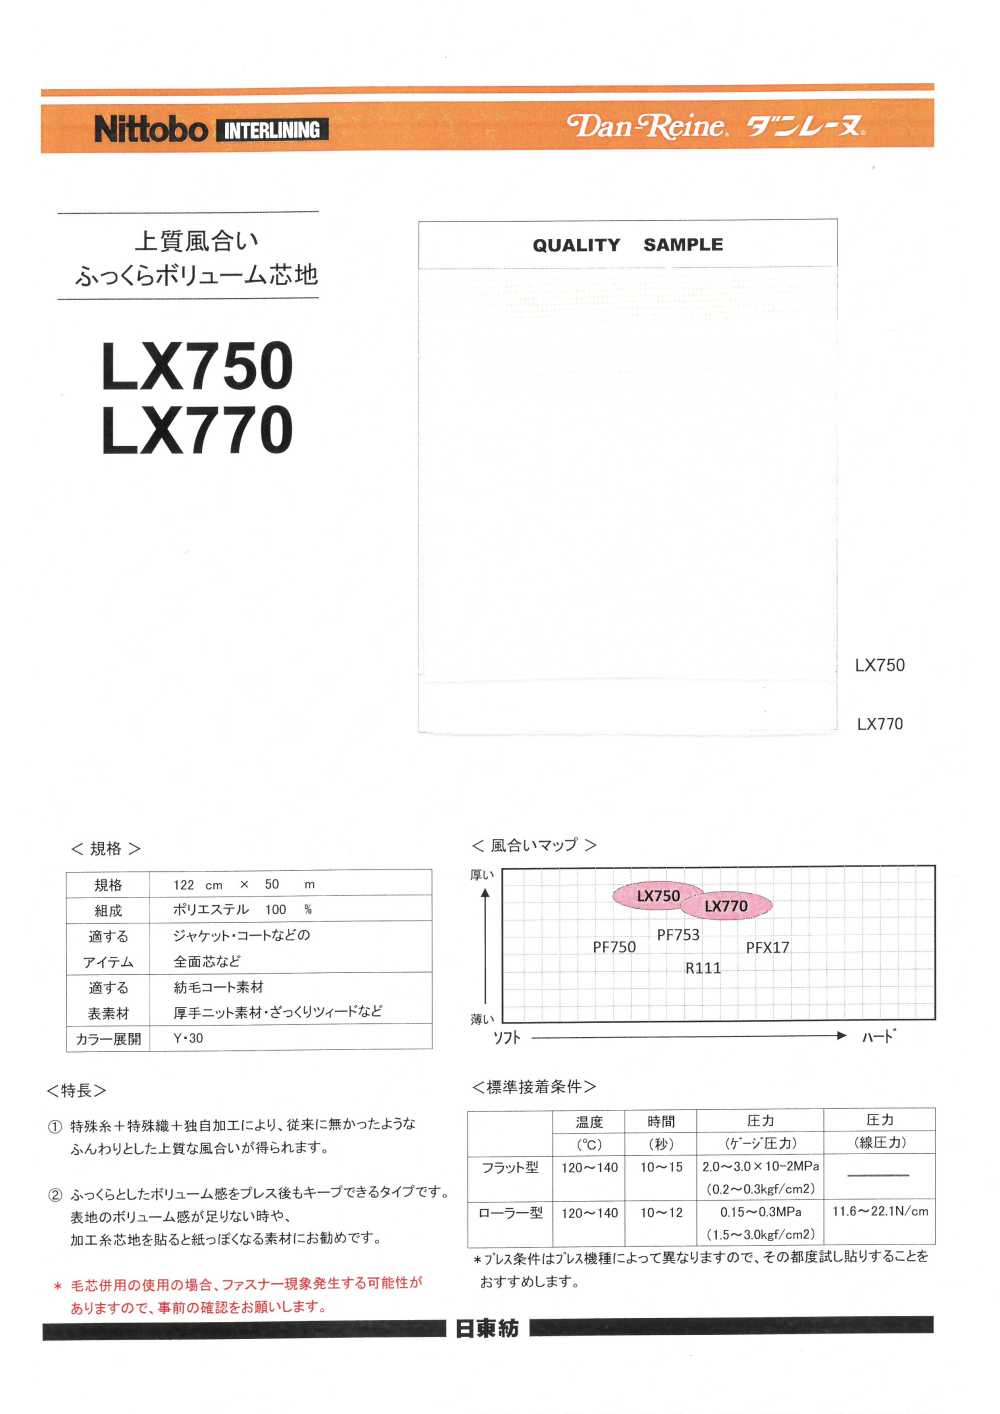 LX770 粘合衬，优质质感，衬布丰满丰盈 日东纺绩